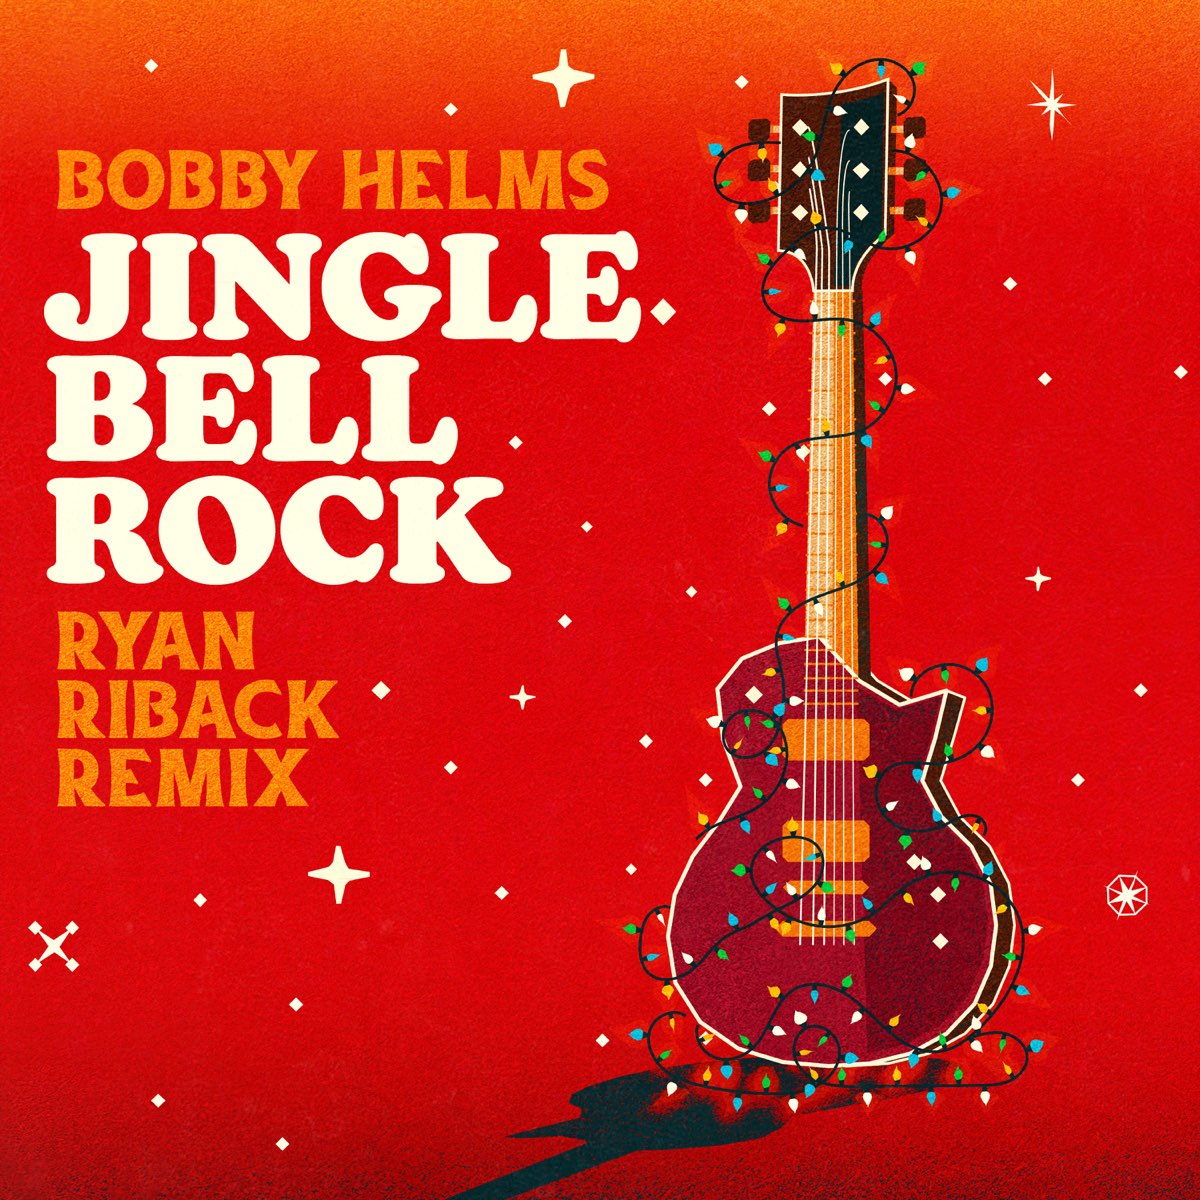 Jingle bell rock fail